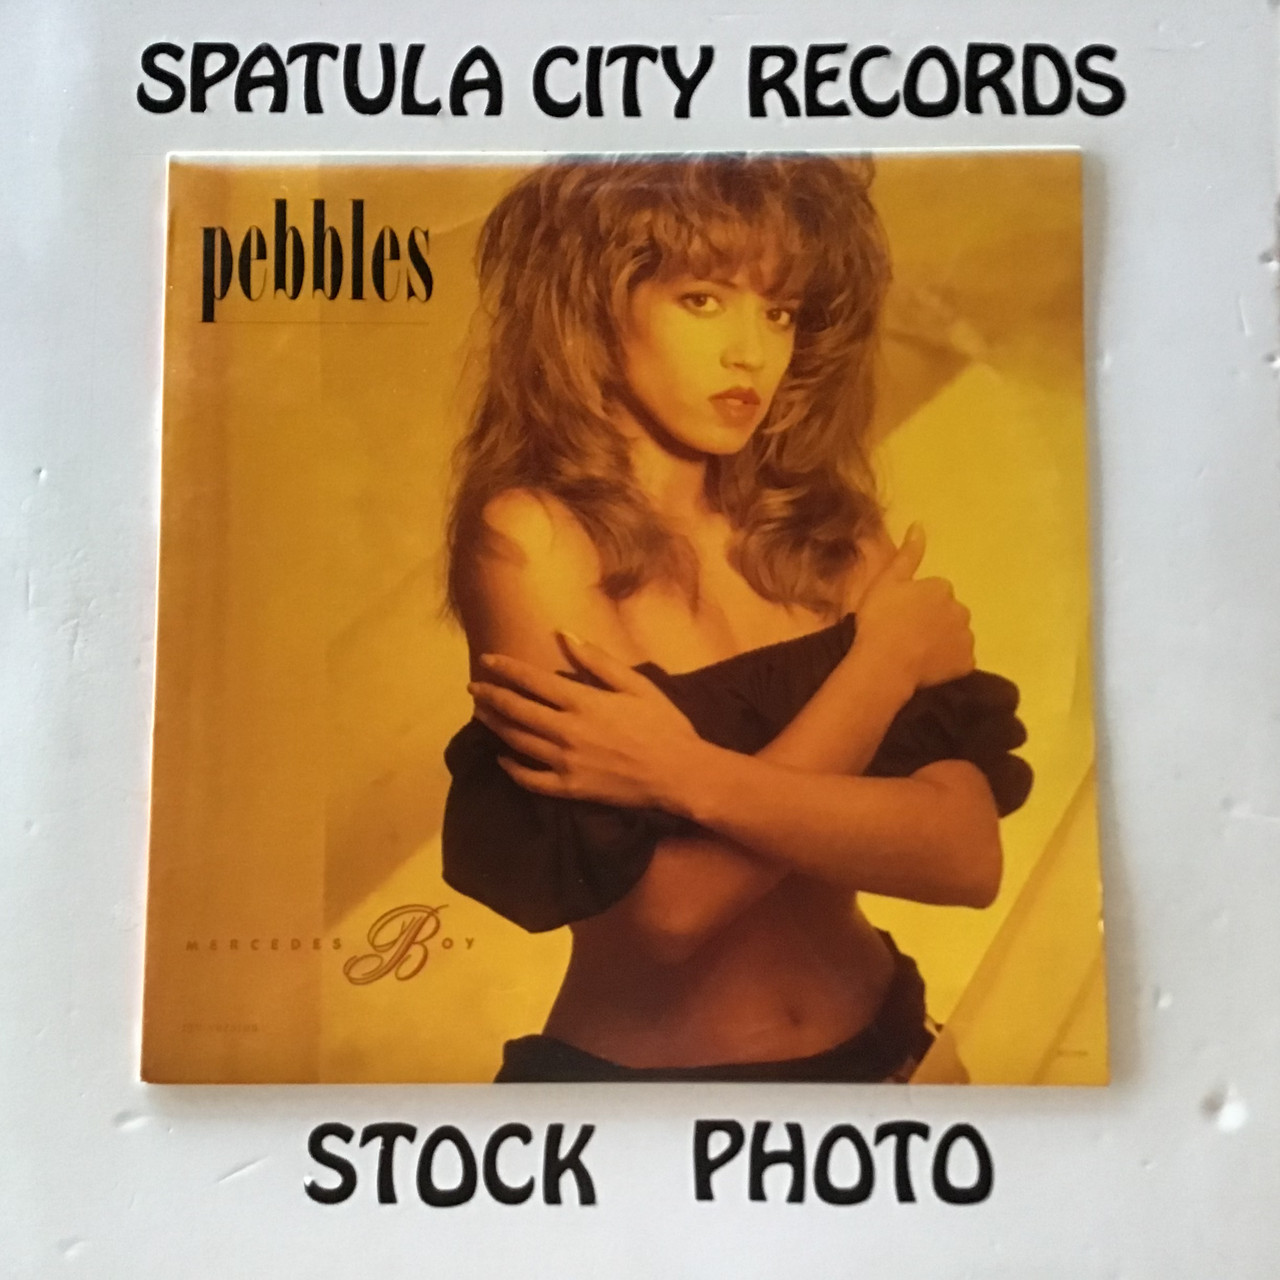 Pebbles - Mercedes Boy - 12" single EP vinyl record album LP